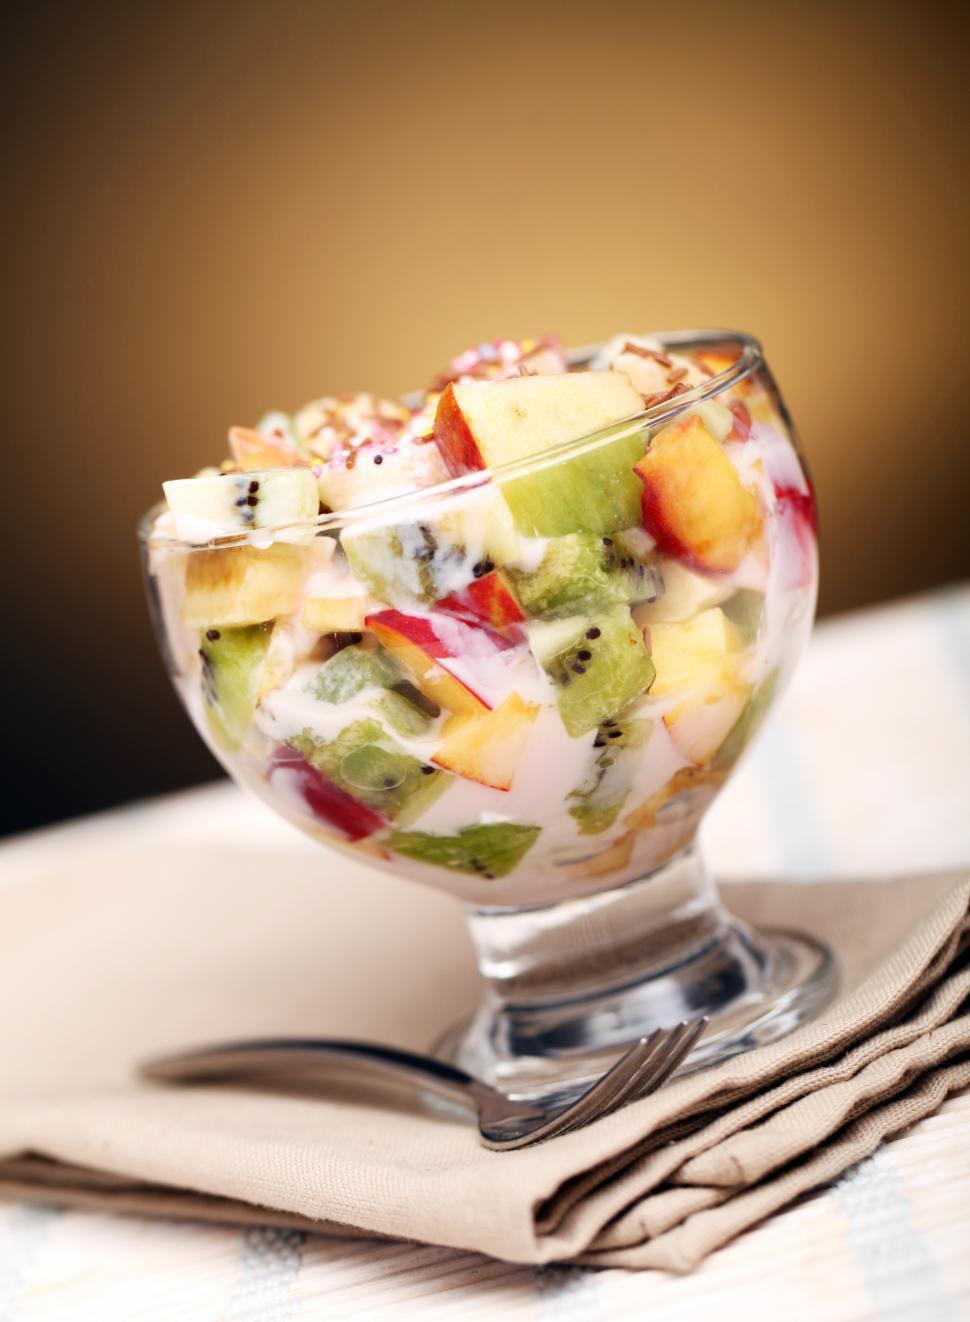 Free Image of Fruit salad with yogurt 